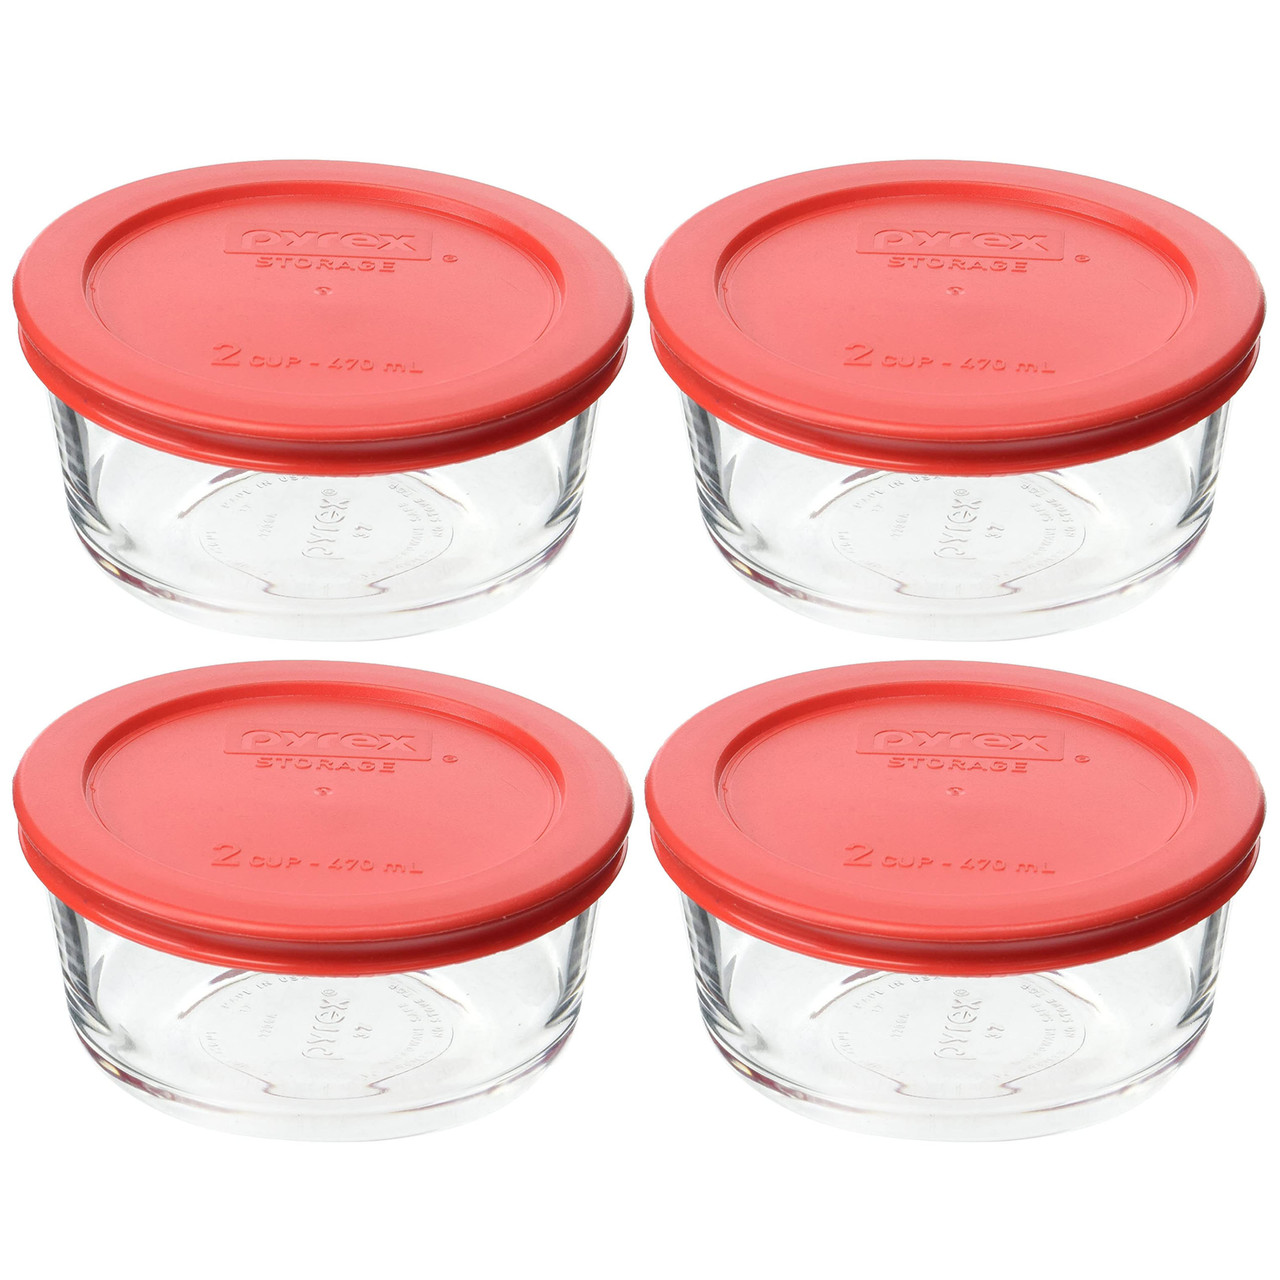 Pyrex (4) 7200 2-cup Glass Bowls, & (4) 7200-PC Red Plastic Lids